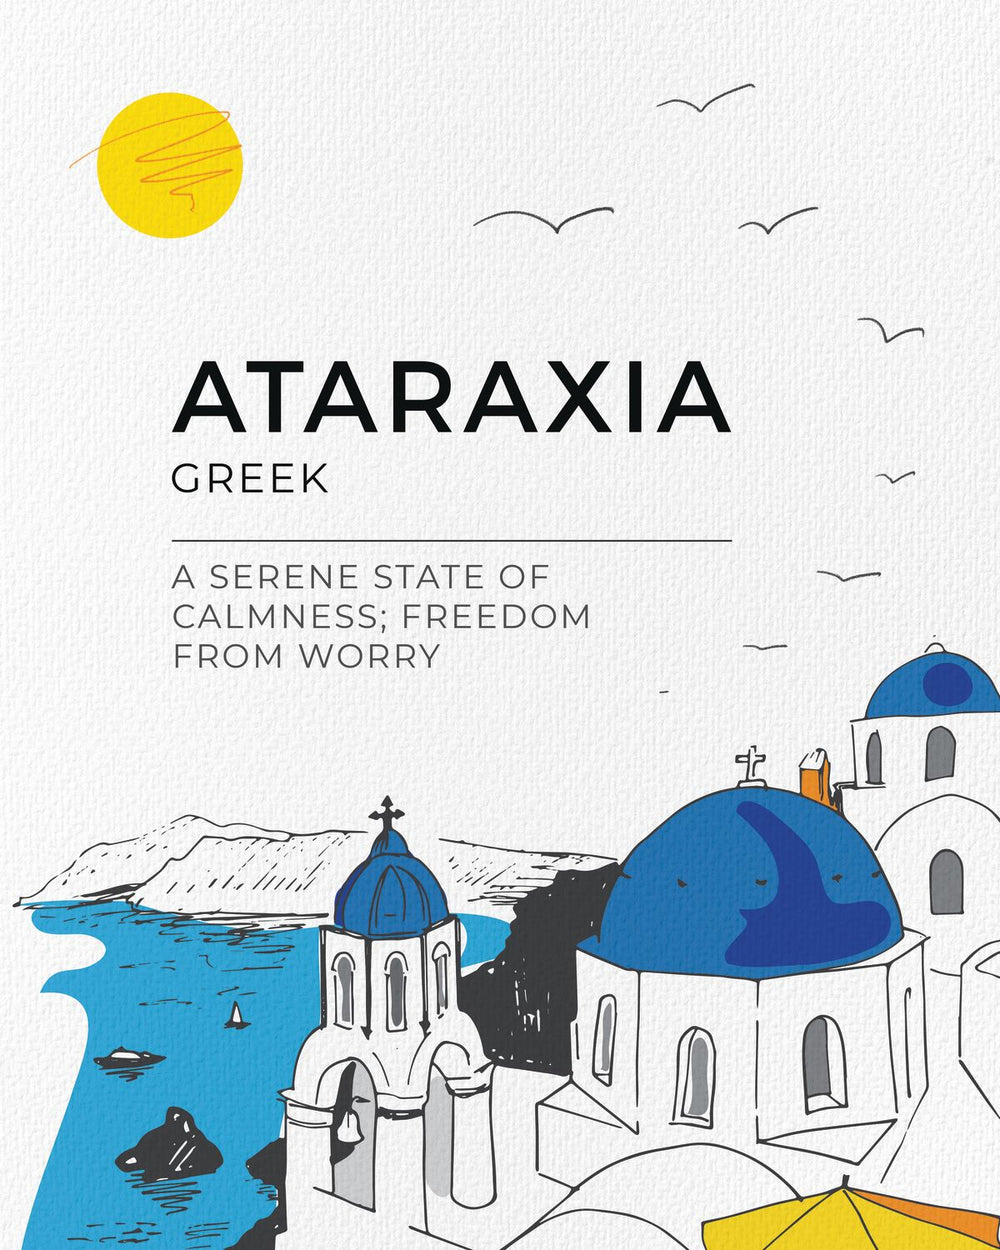 Ataraxia Definition